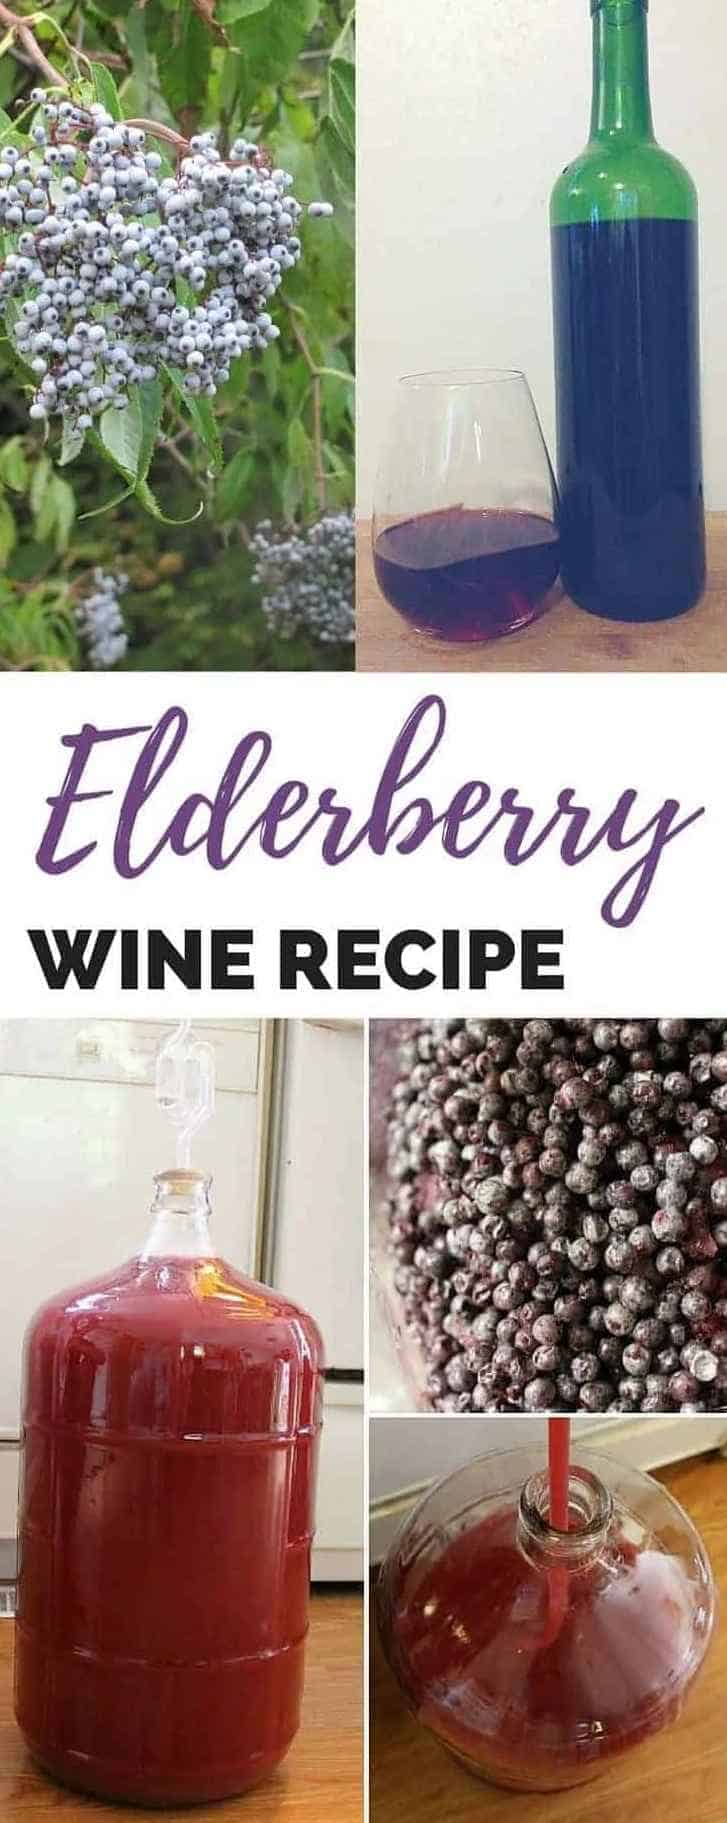 Elderberry-Wine